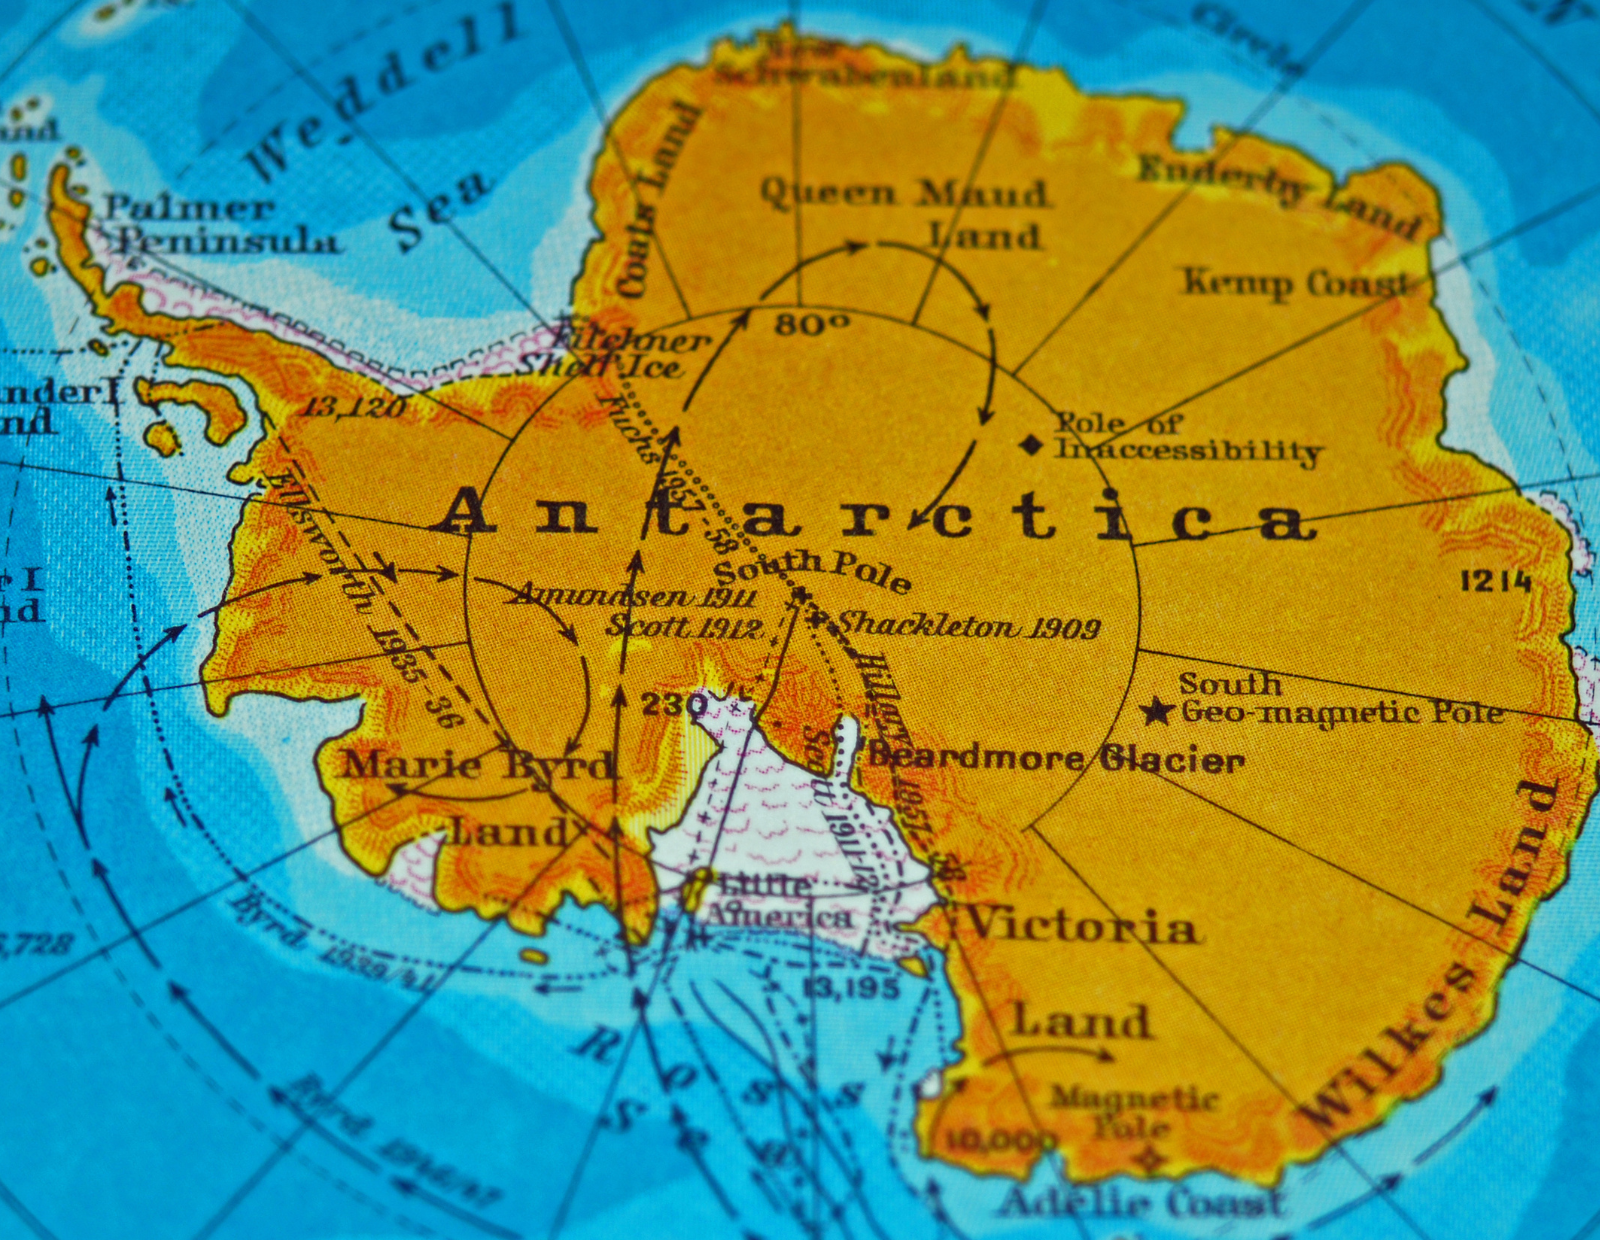 antarctica map